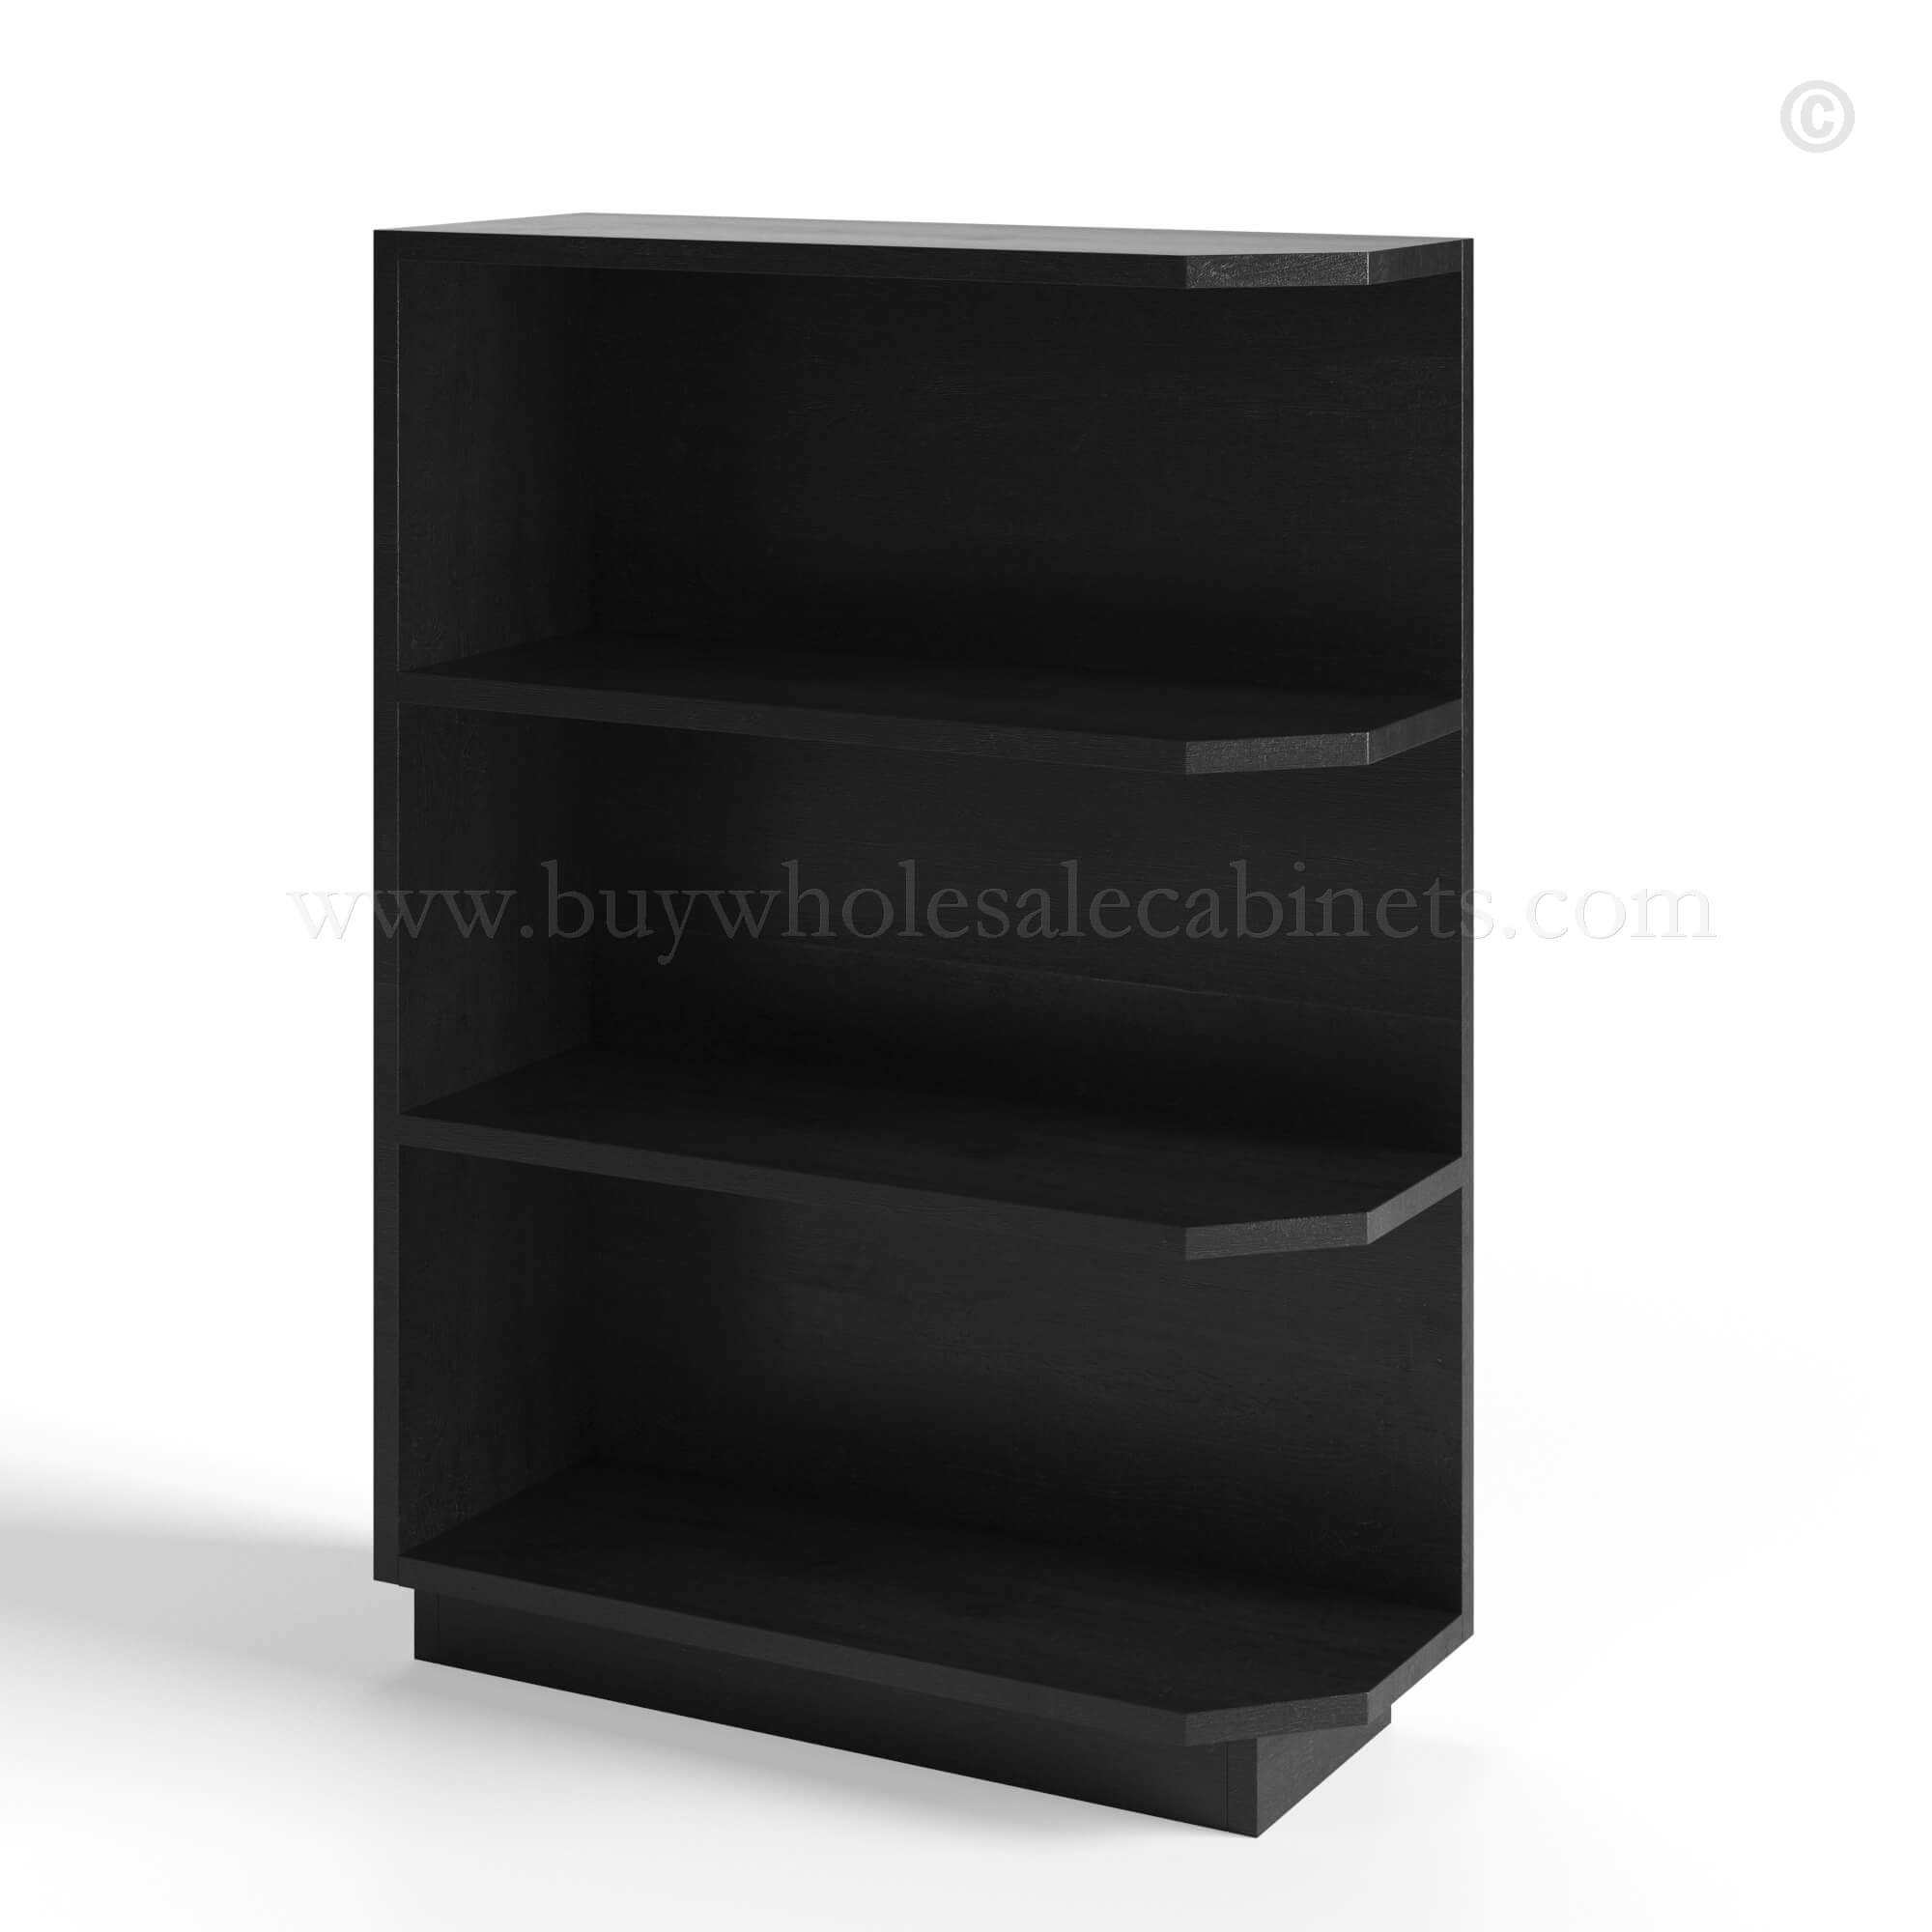 charcoal black shaker base end shelf cabinet, rta cabinets, wholesale cabinets